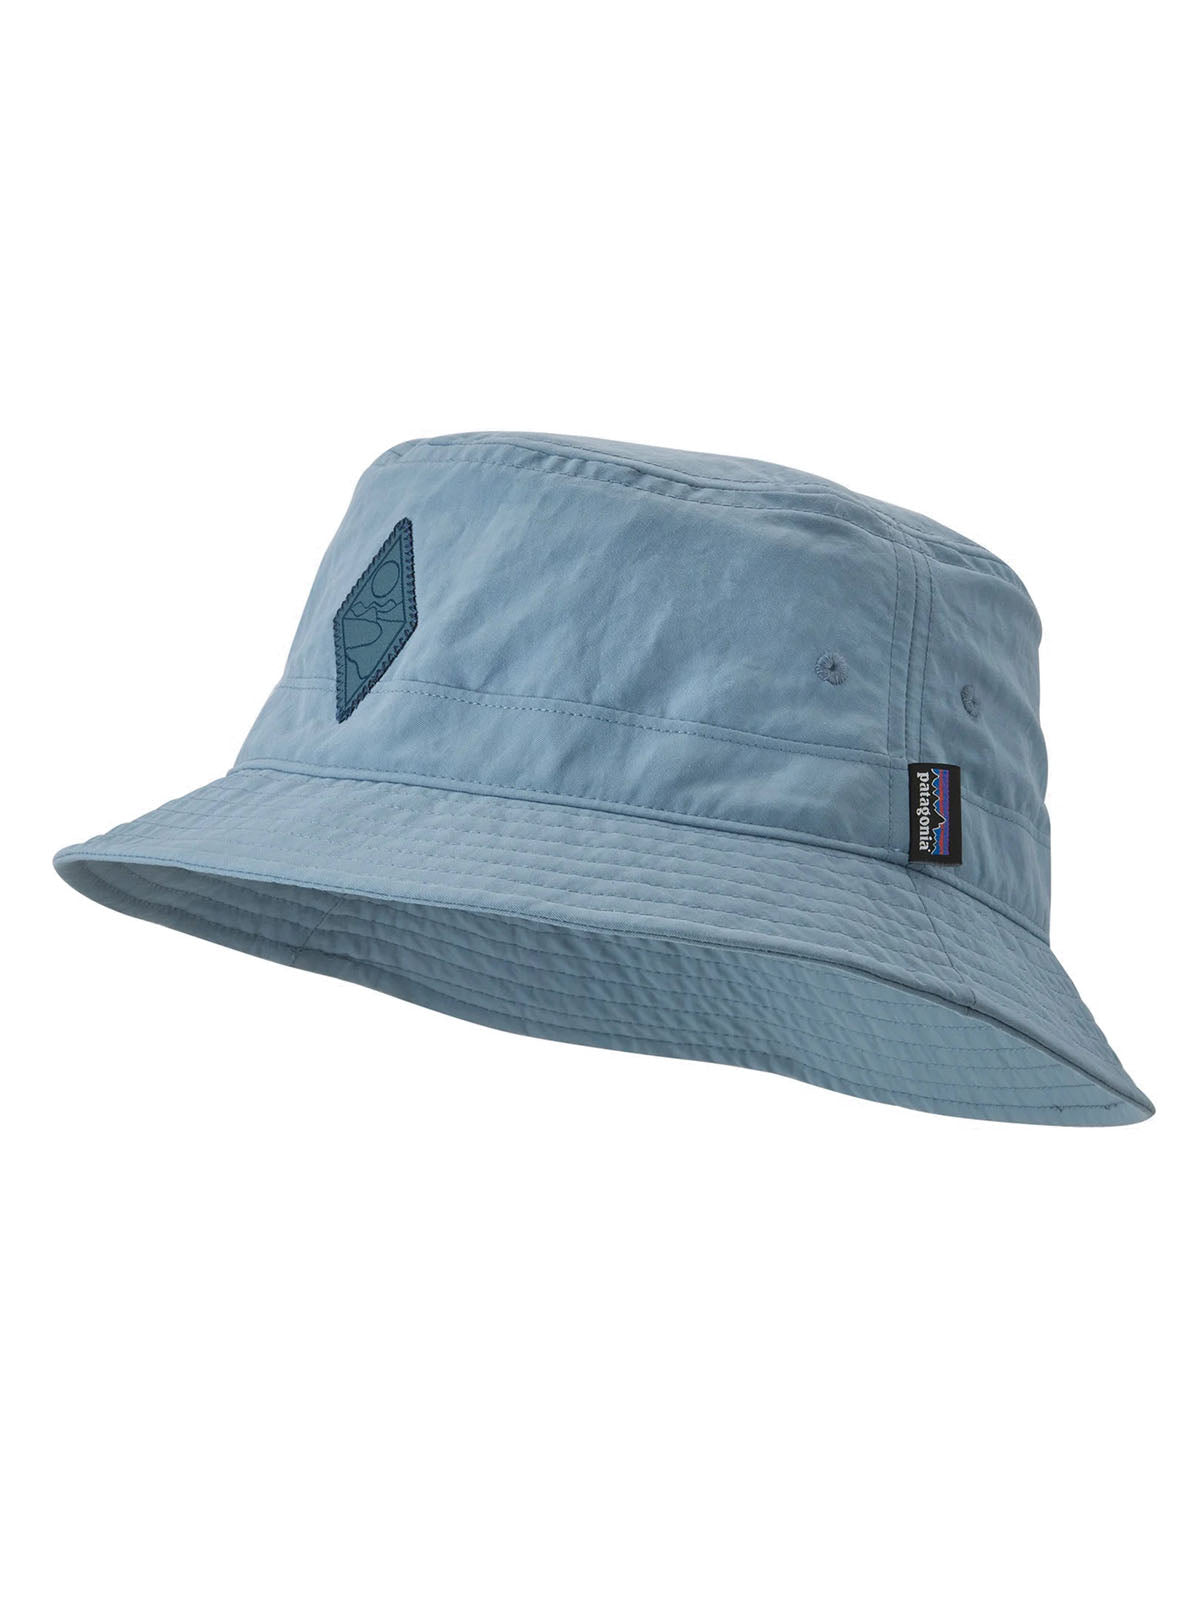 Cappelli alla pescatora Unisex Patagonia - Wavefarer Bucket Hat - Blu